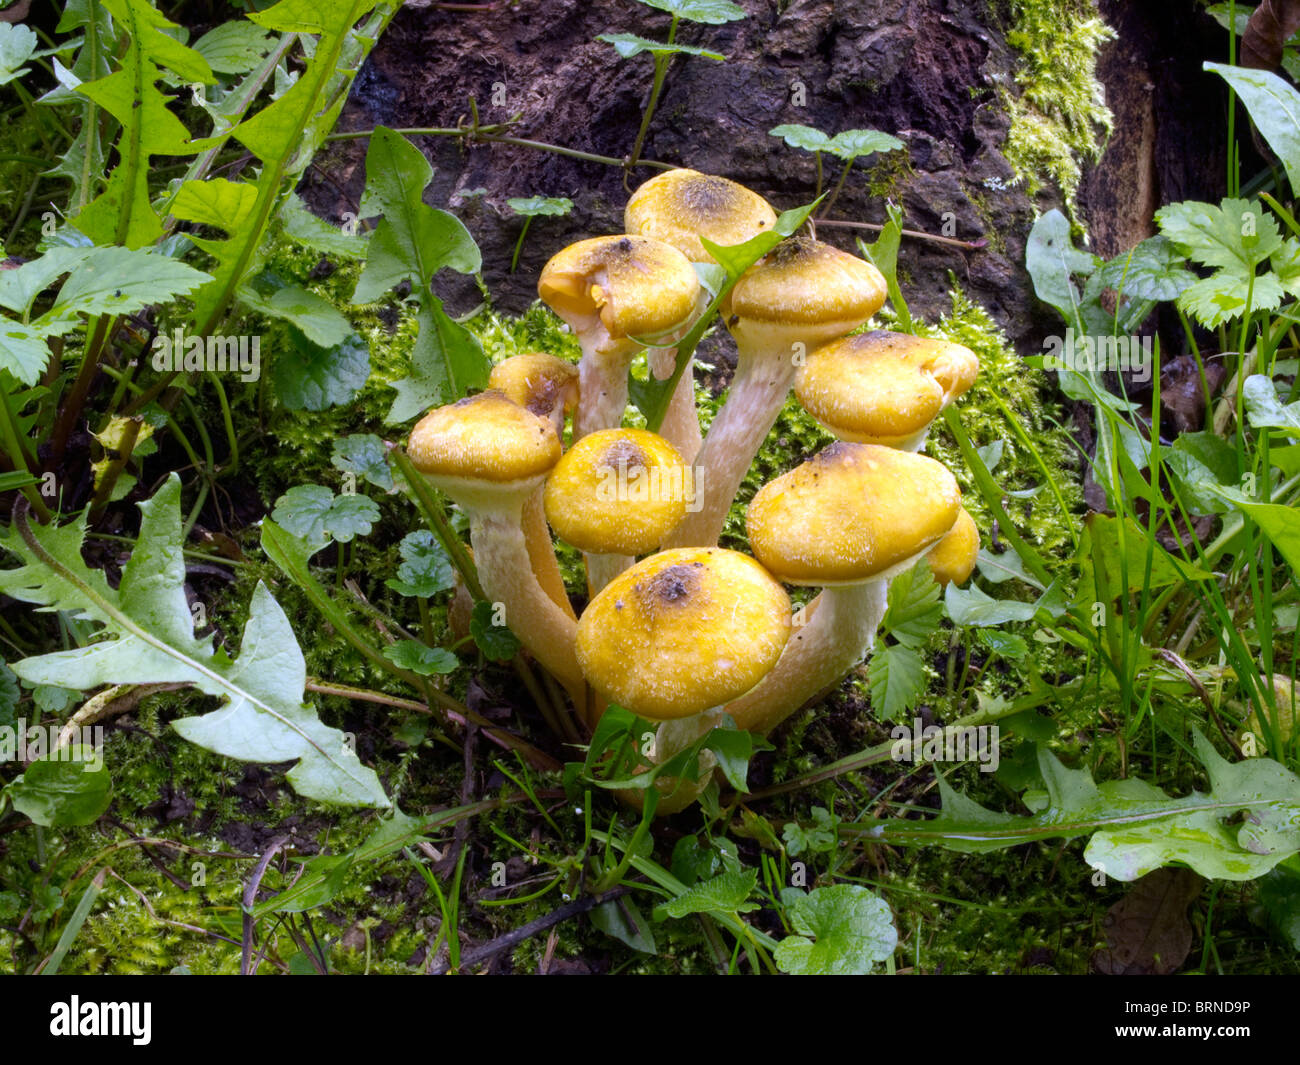 Armillária méllea mushrooms Stock Photo